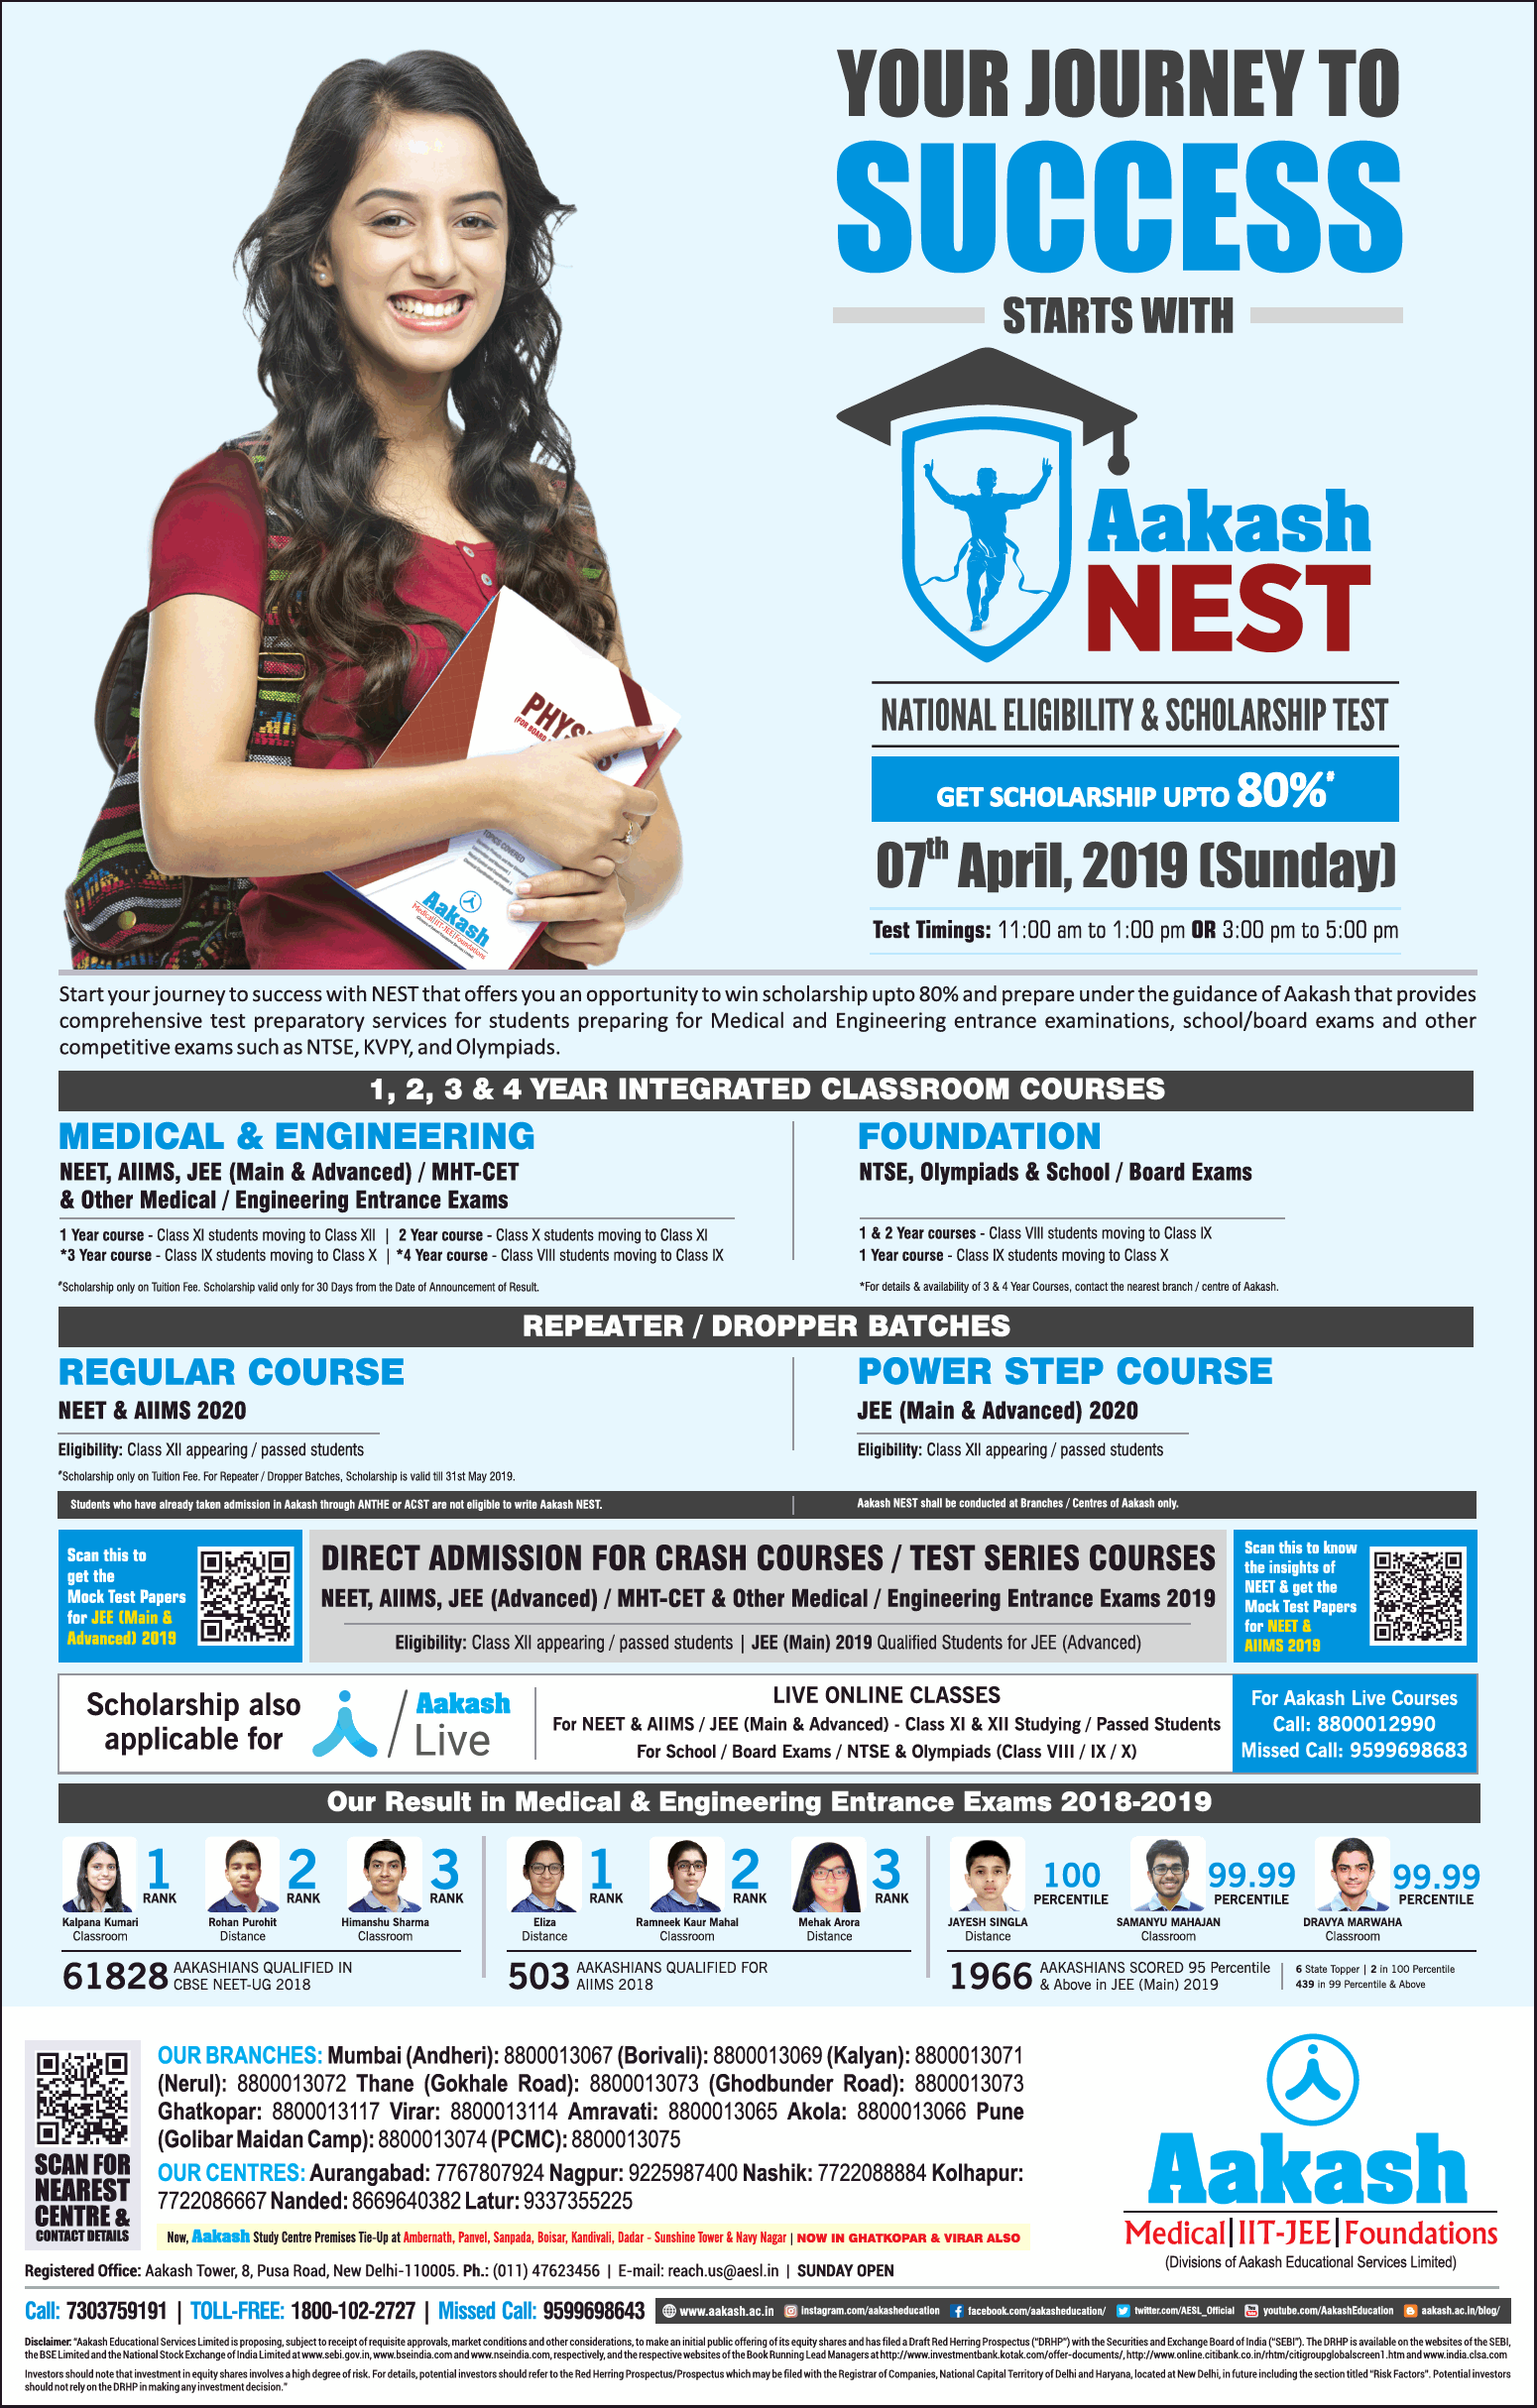 aakash-medical-iit-jee-foundation-aakash-nest-ad-times-of-india-mumbai-02-04-2019.png